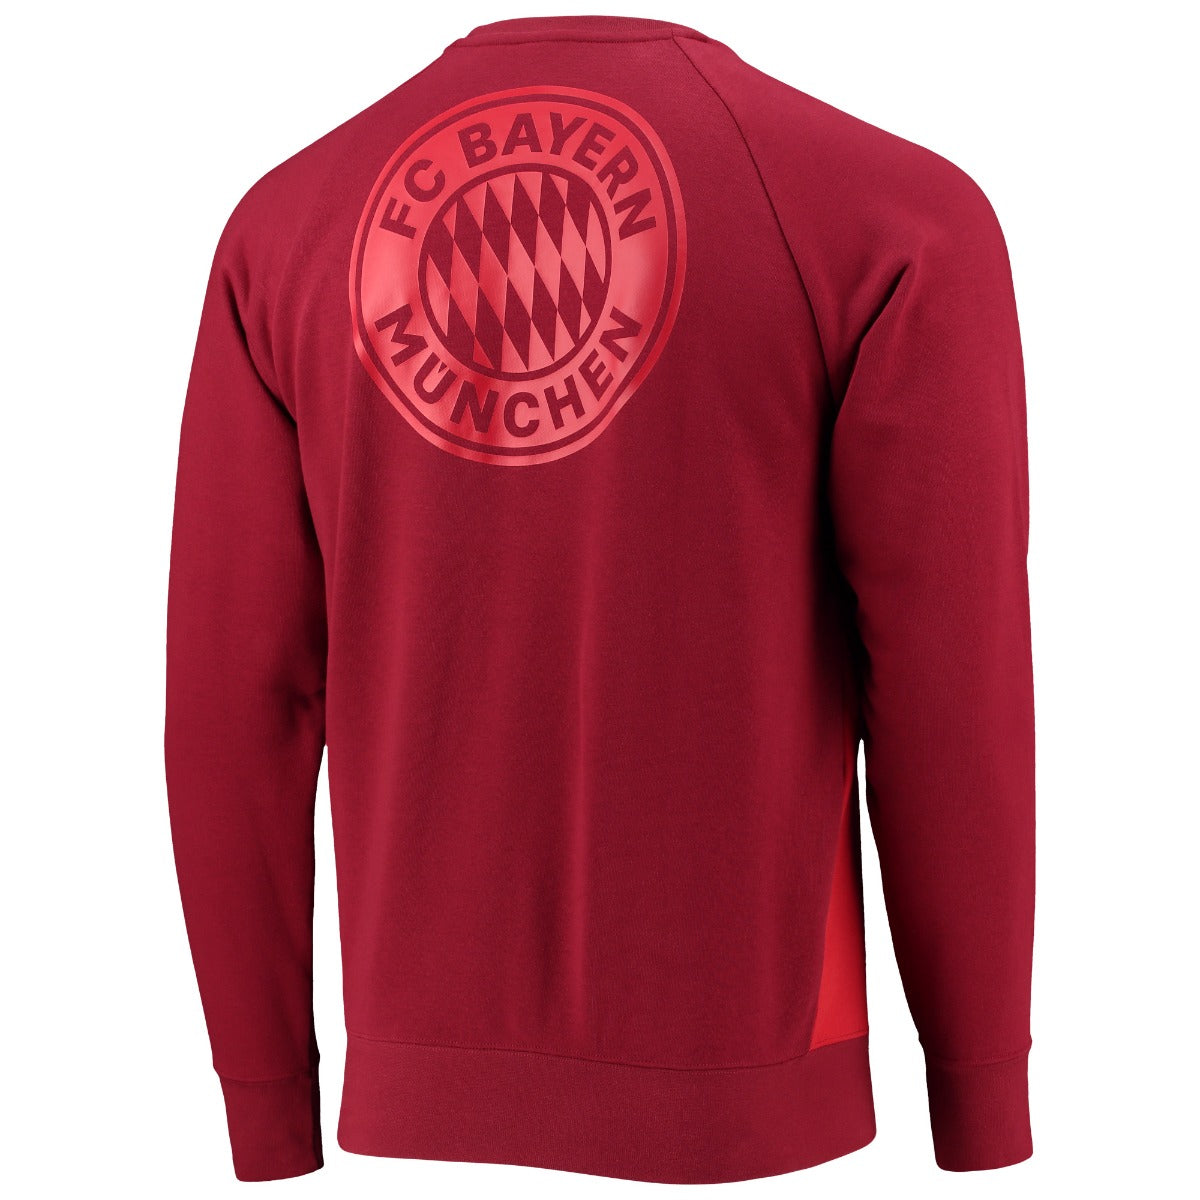 Adidas 2021-22 Bayern Munich Graphic Crew Sweatshirt - Red (Back)